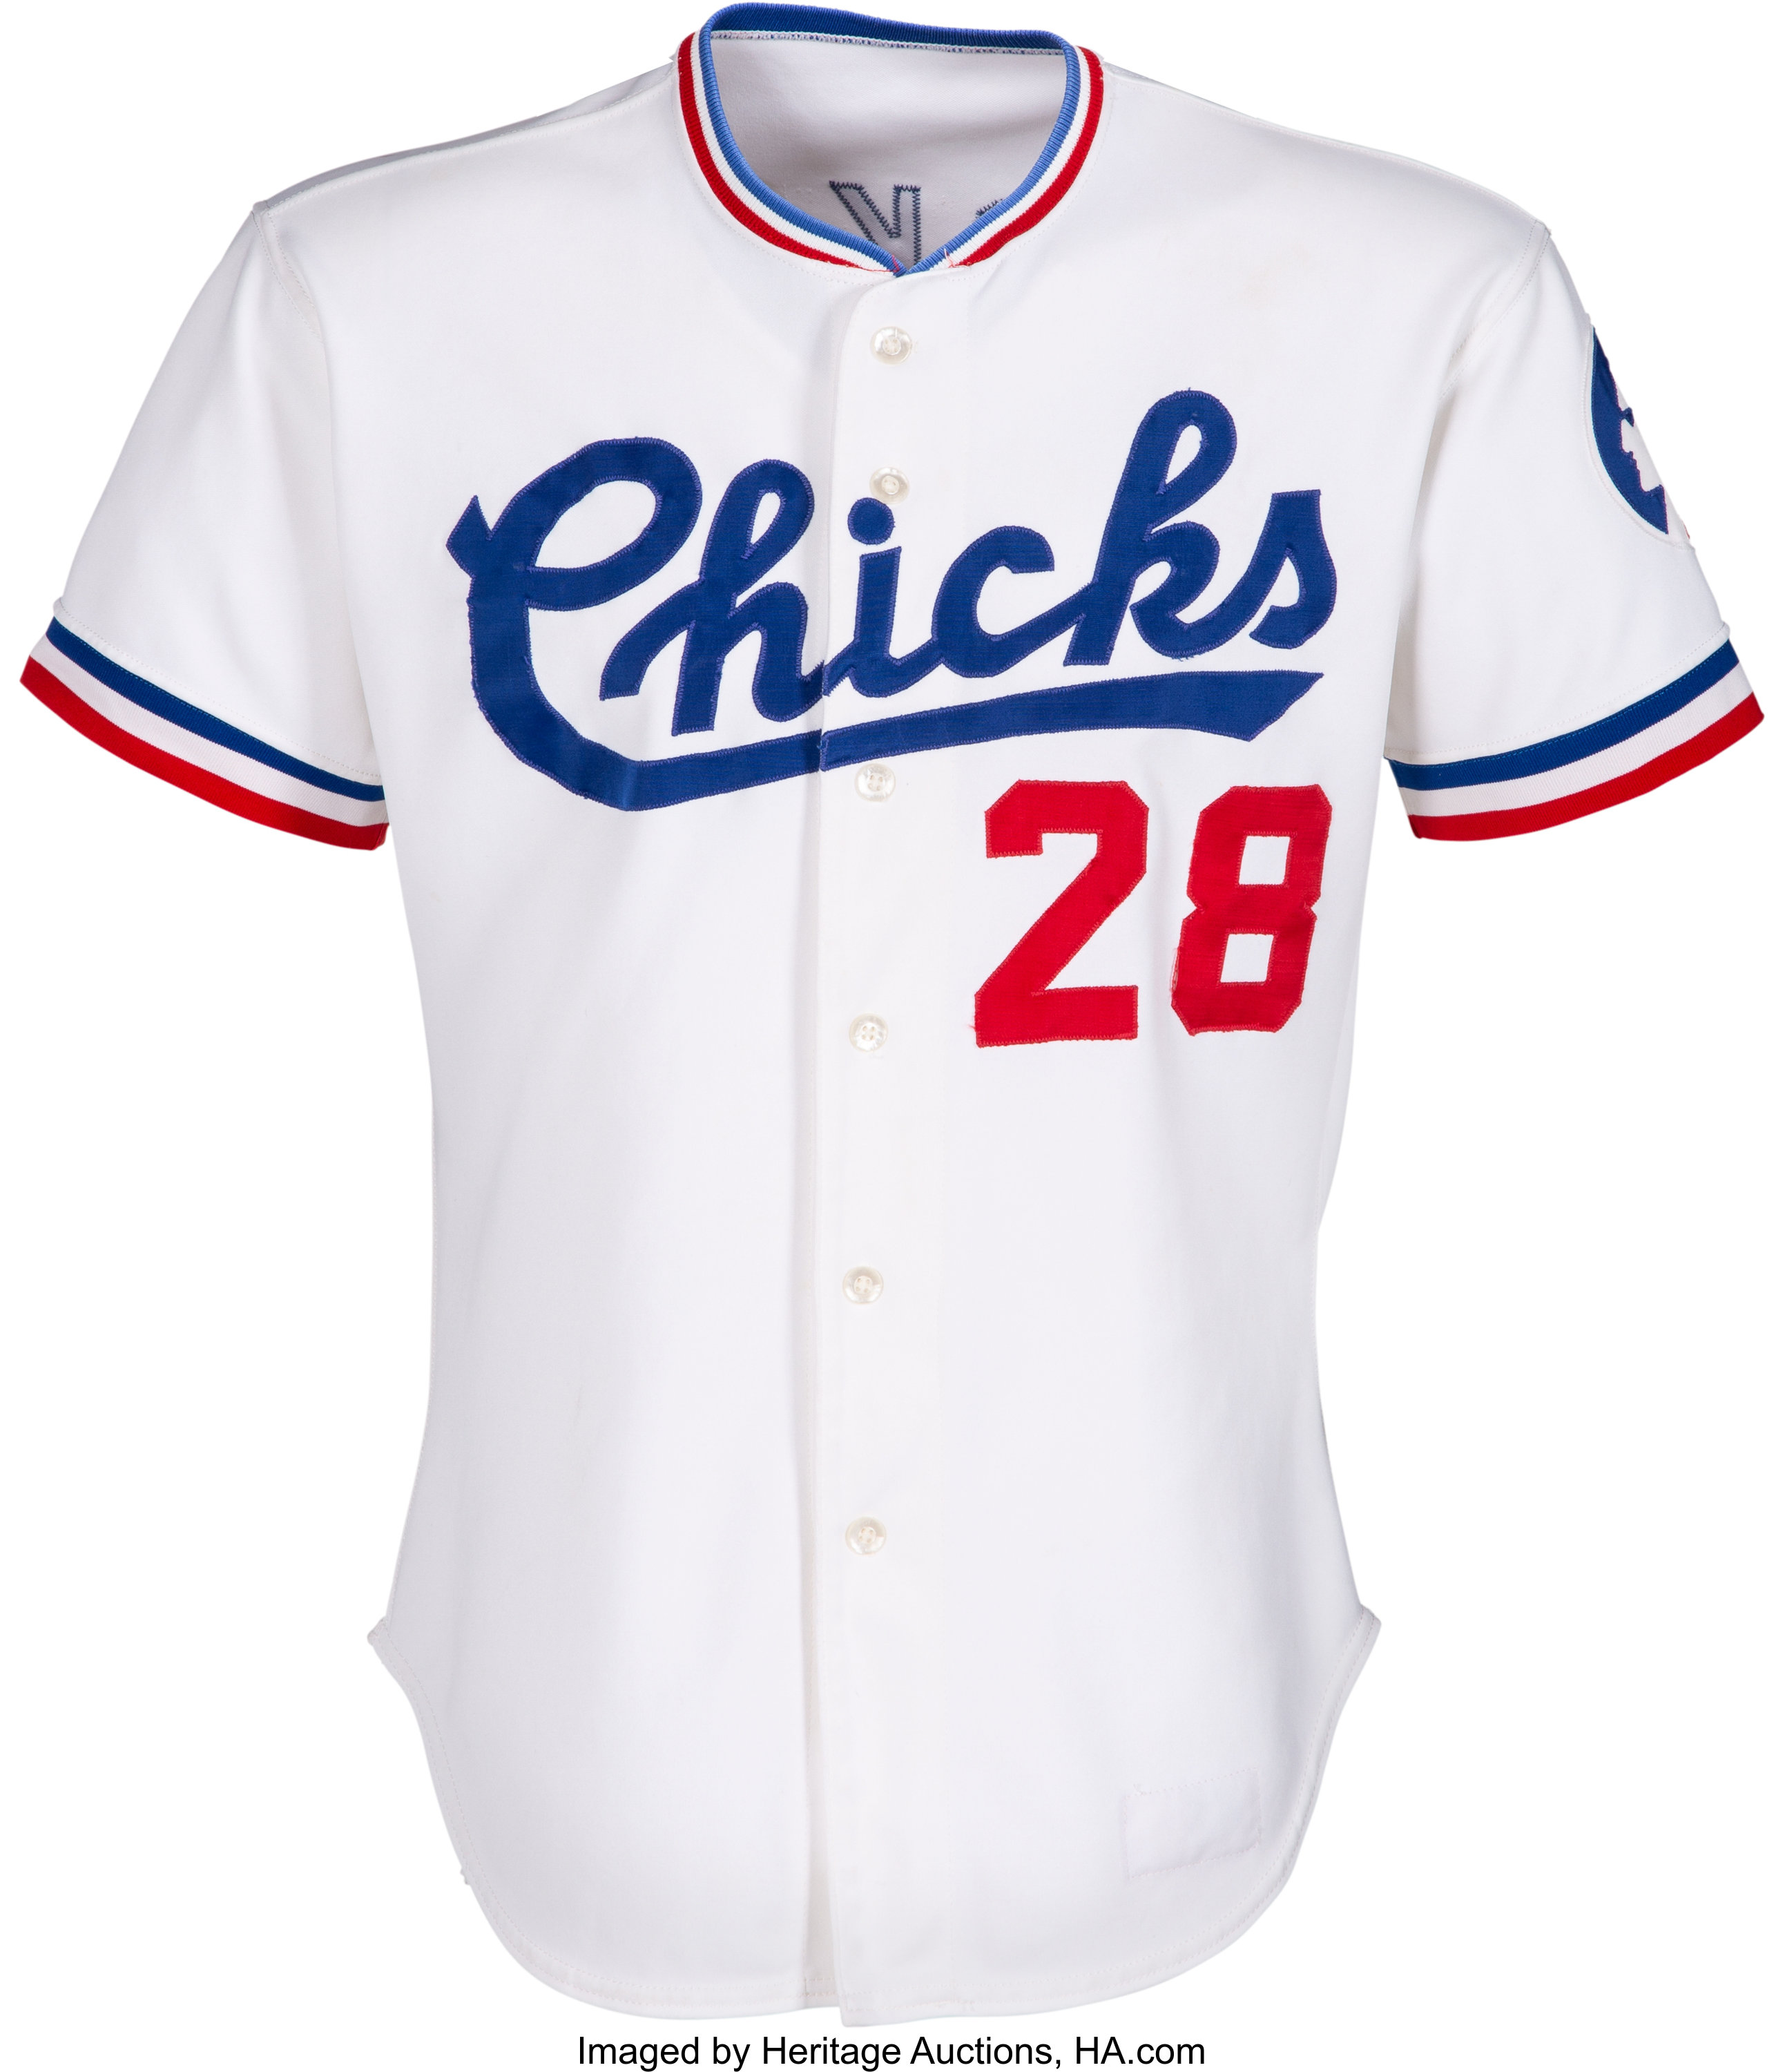 Bo Jackson #28 Chicks White Baseball Jersey Memphis Uniform Embroidered  Gift 